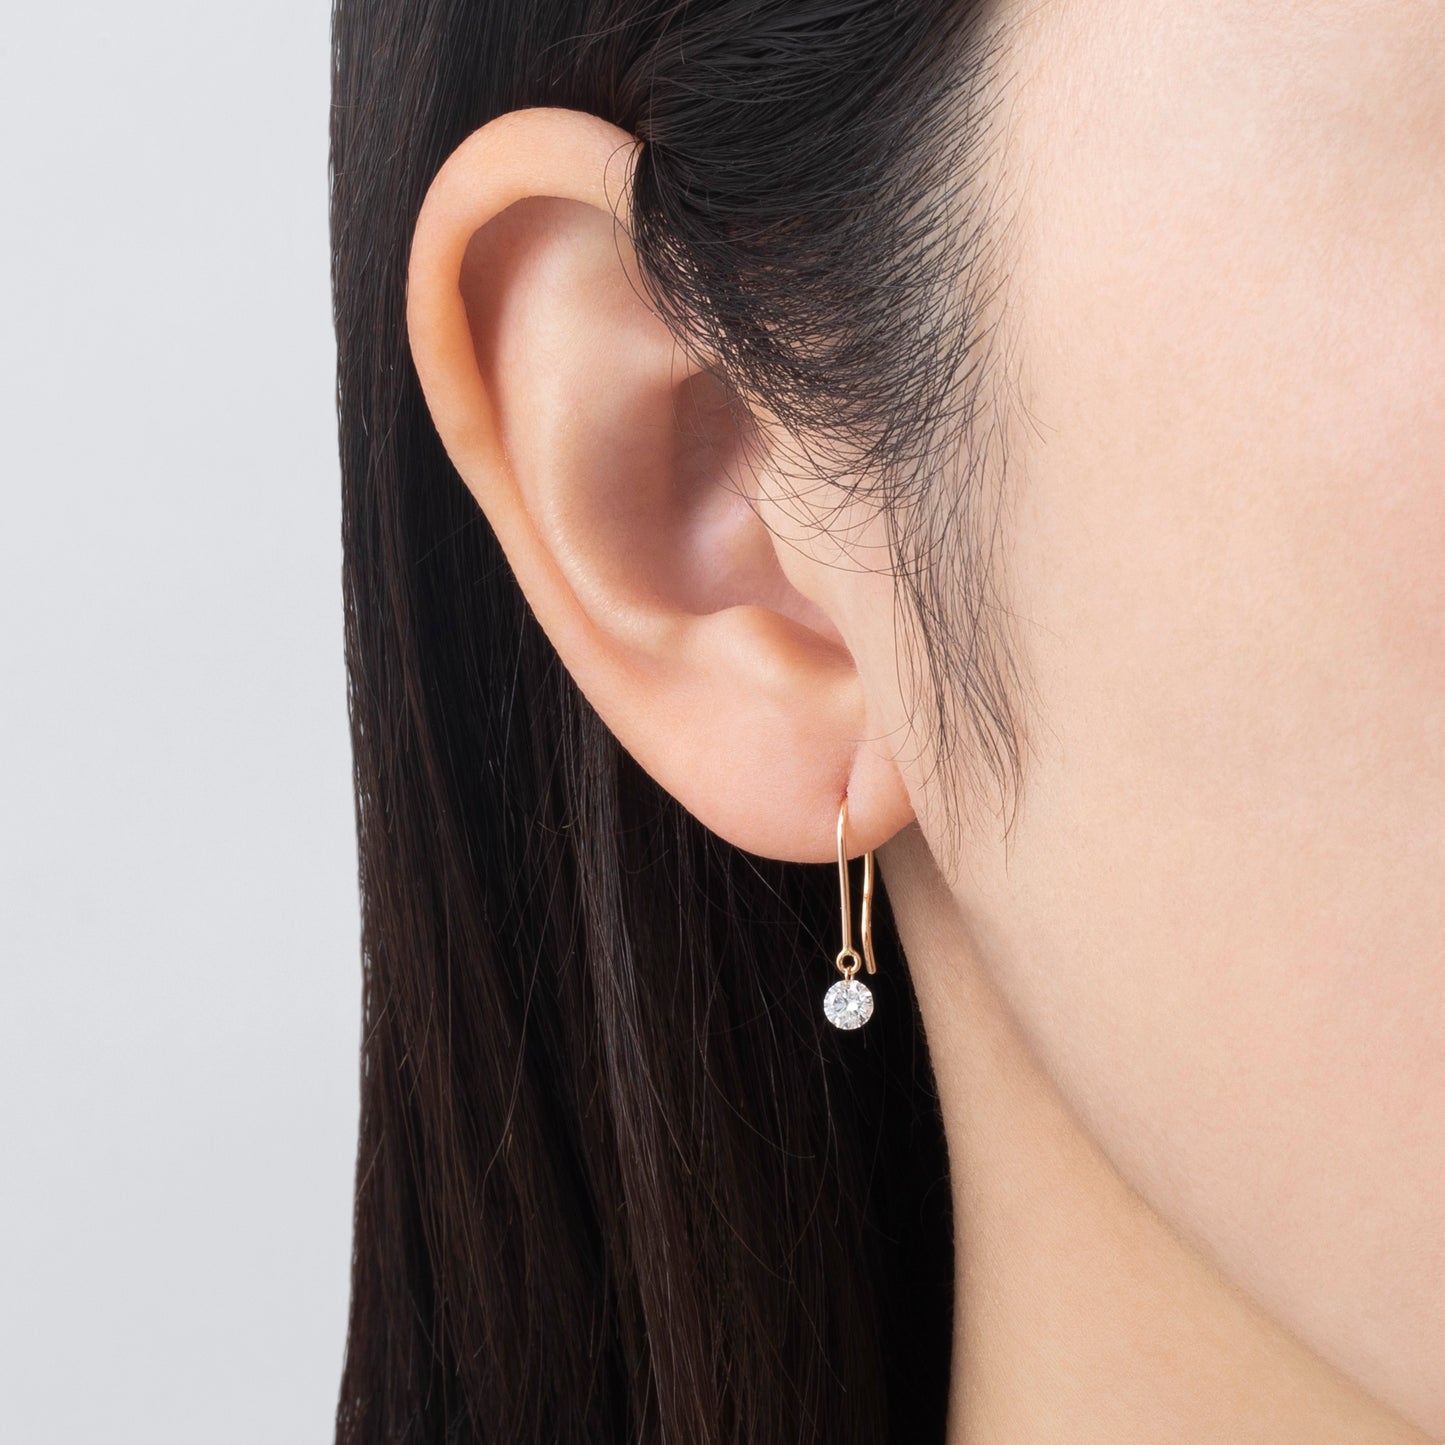 INNOCENCE1 grain earrings/ K18 pink gold/ 0.2 carat x 2 pieces